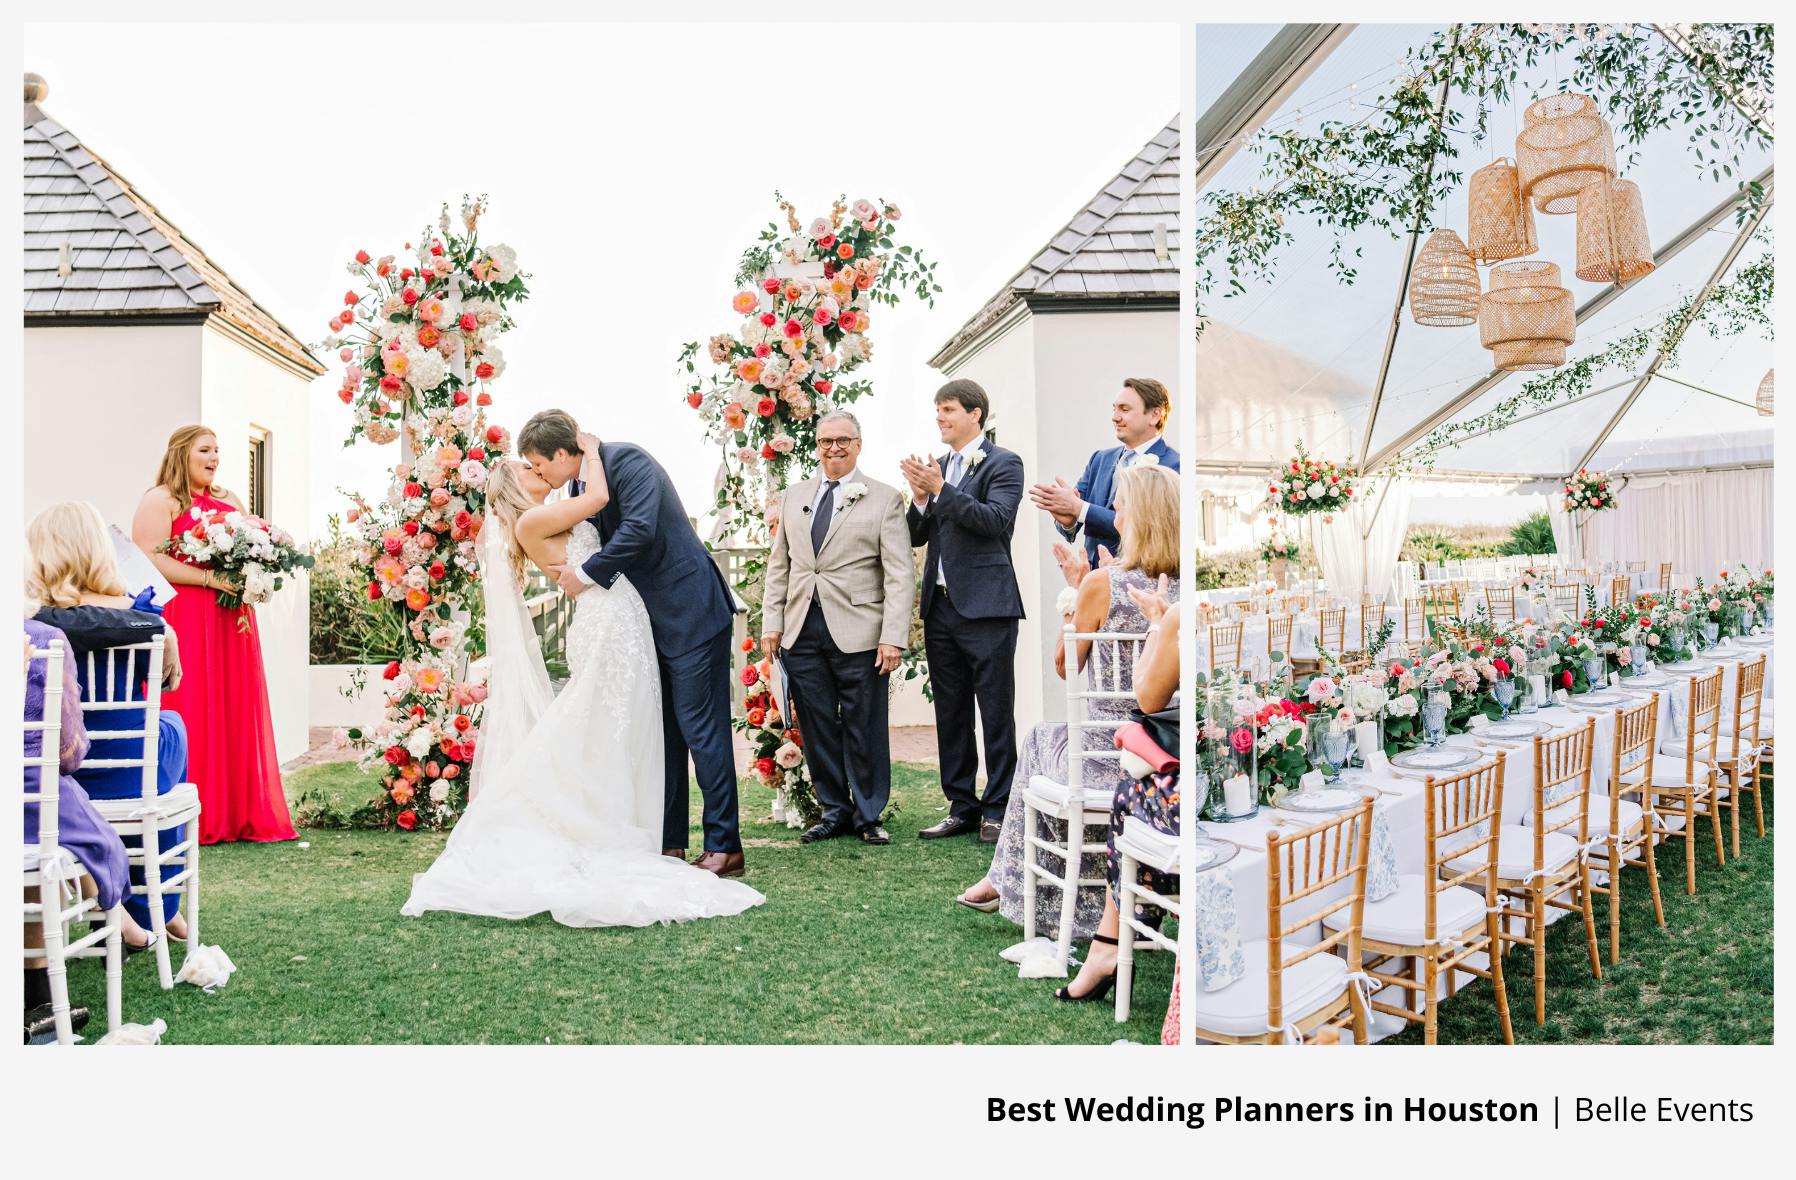 21 Best Wedding Planners in Houston + Ones to Watch [Top List] - PartySlate